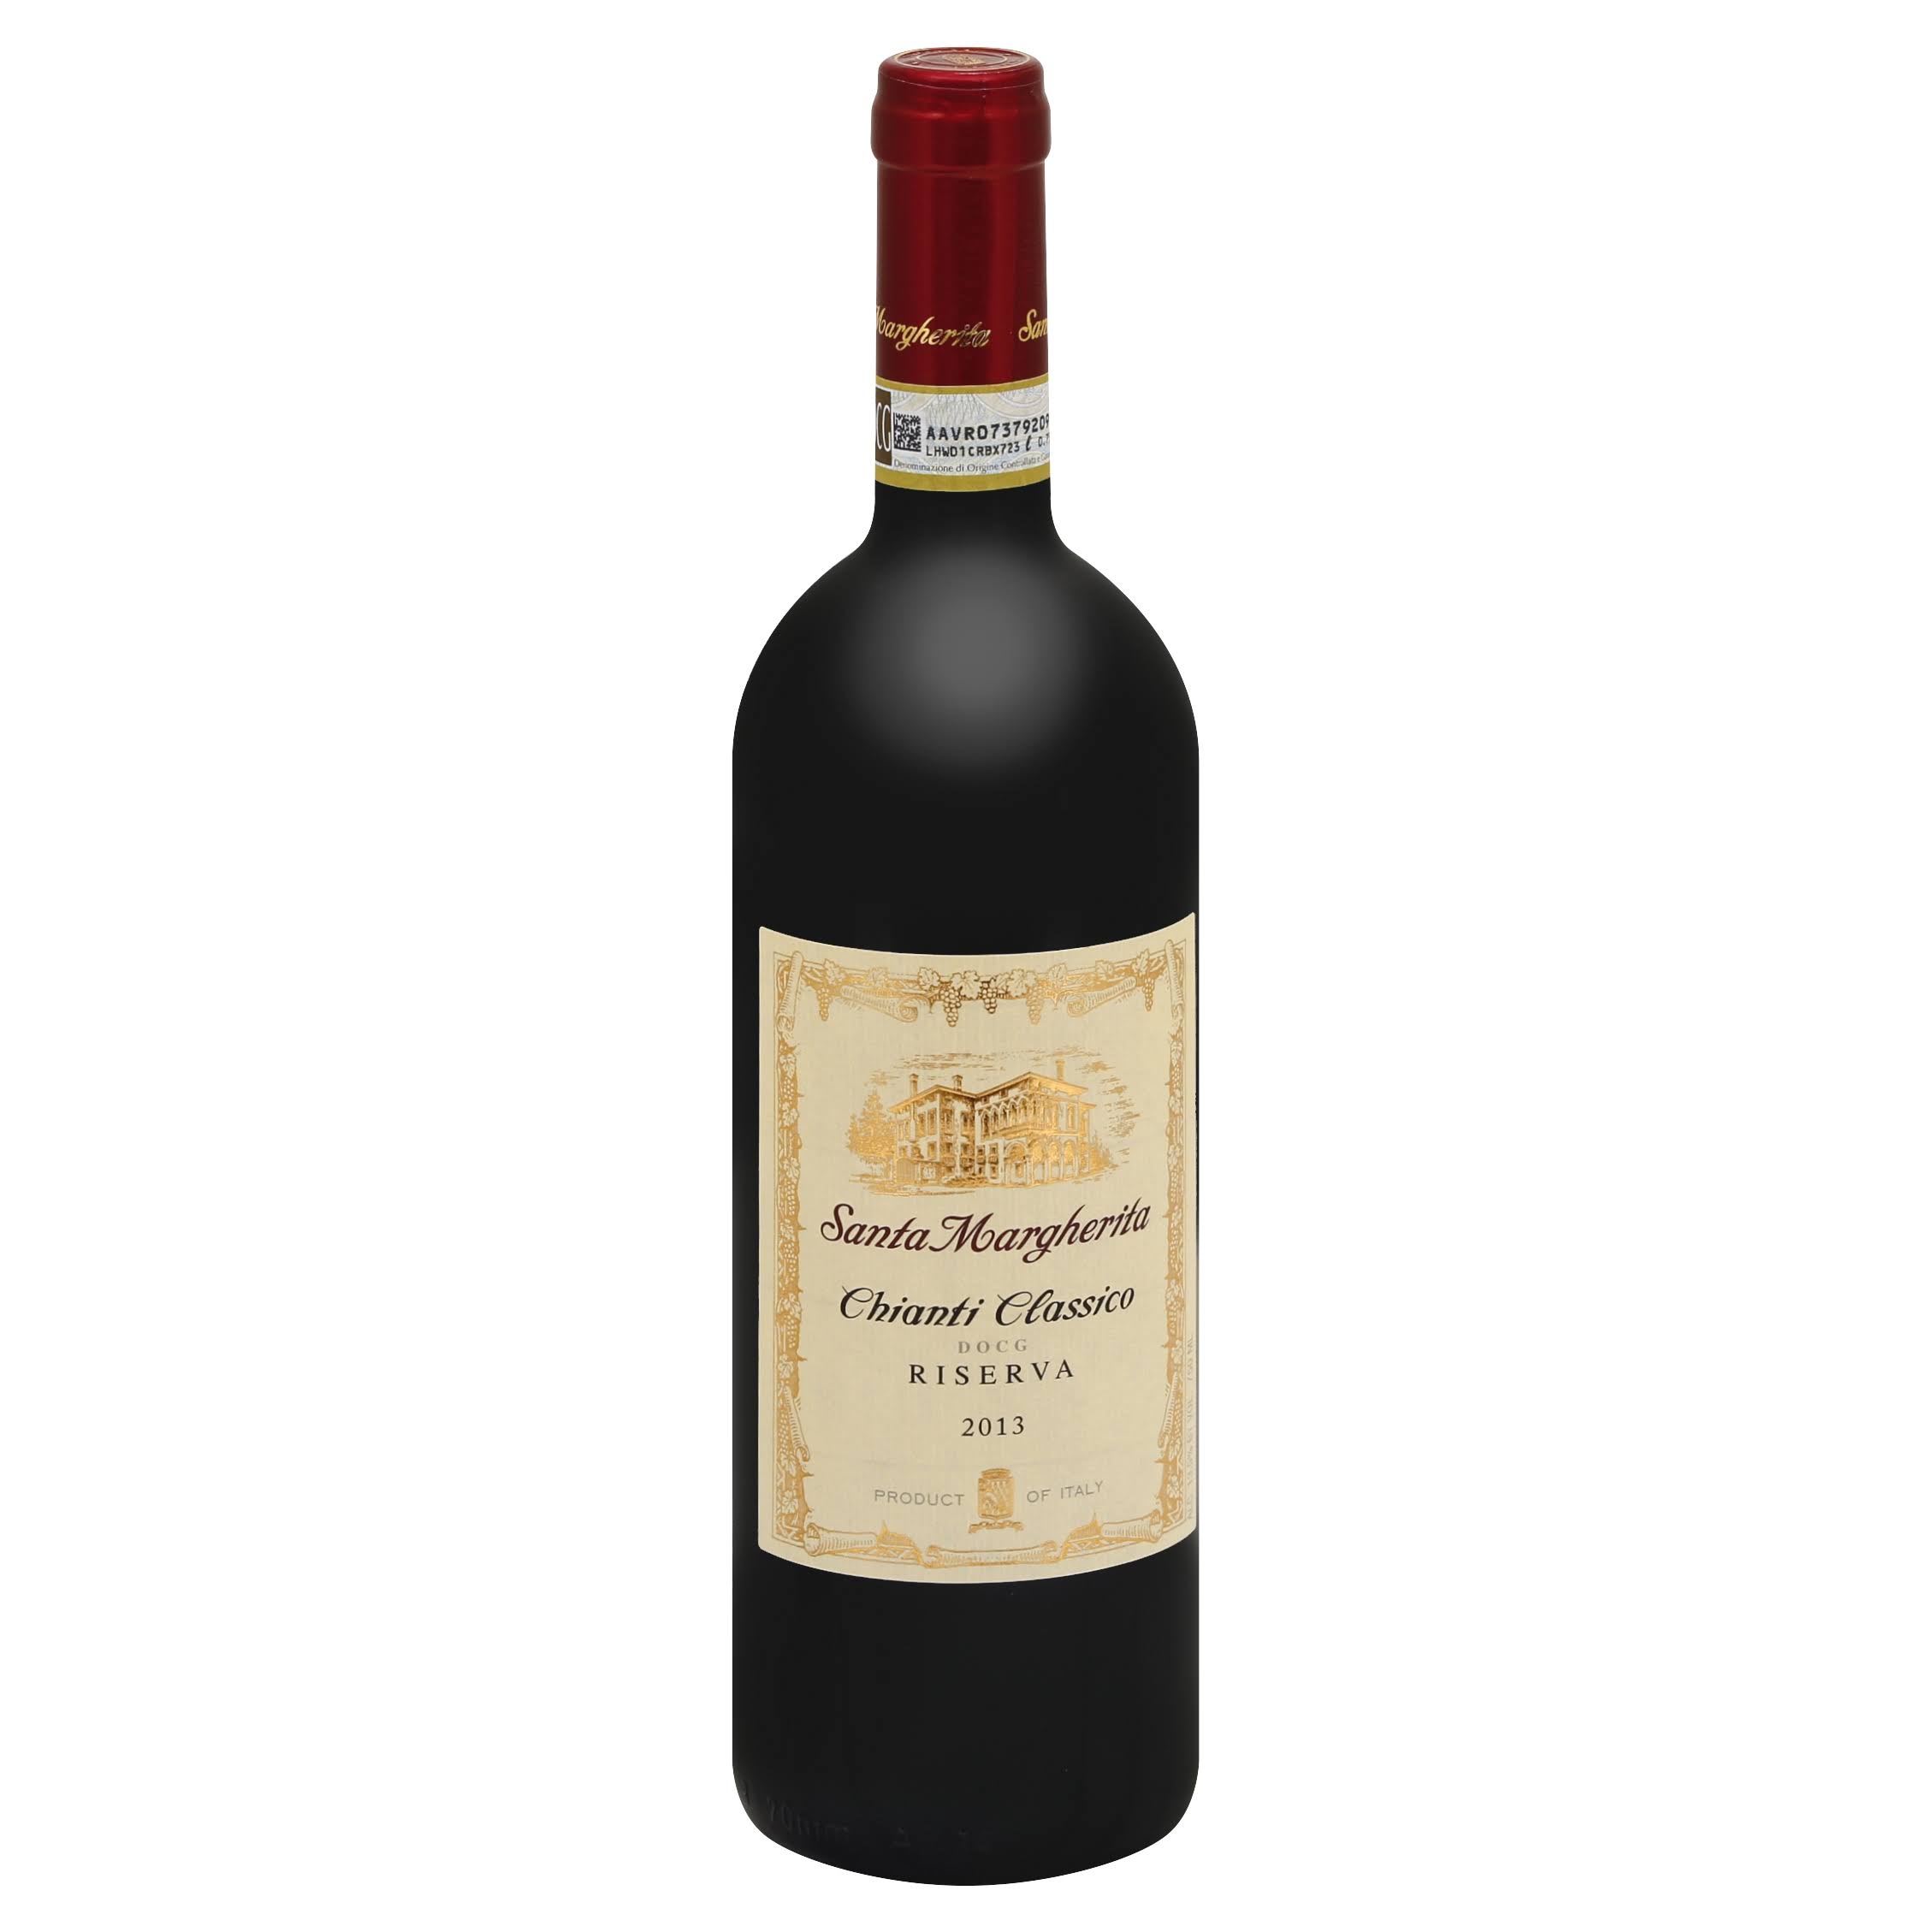 Santa Margherita Chianti Classico Riserva (Vintage Varies) - 750 ml bottle